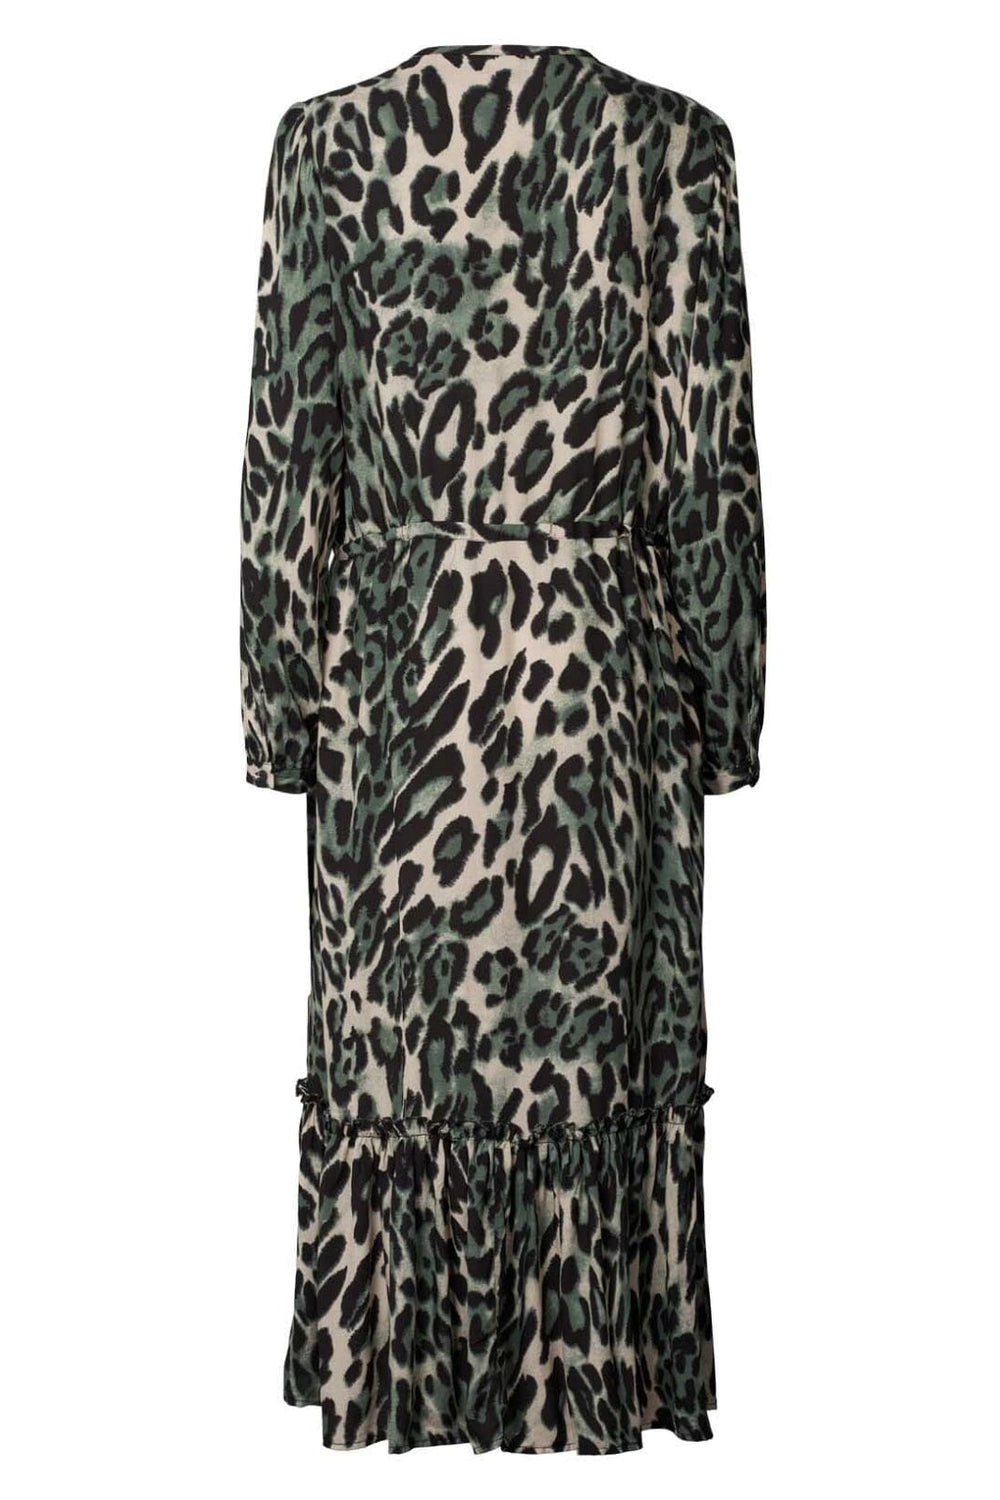 Forudbestilling - Lollys Laundry - Anastacia Dress - 72 Leopard Print Kjoler 